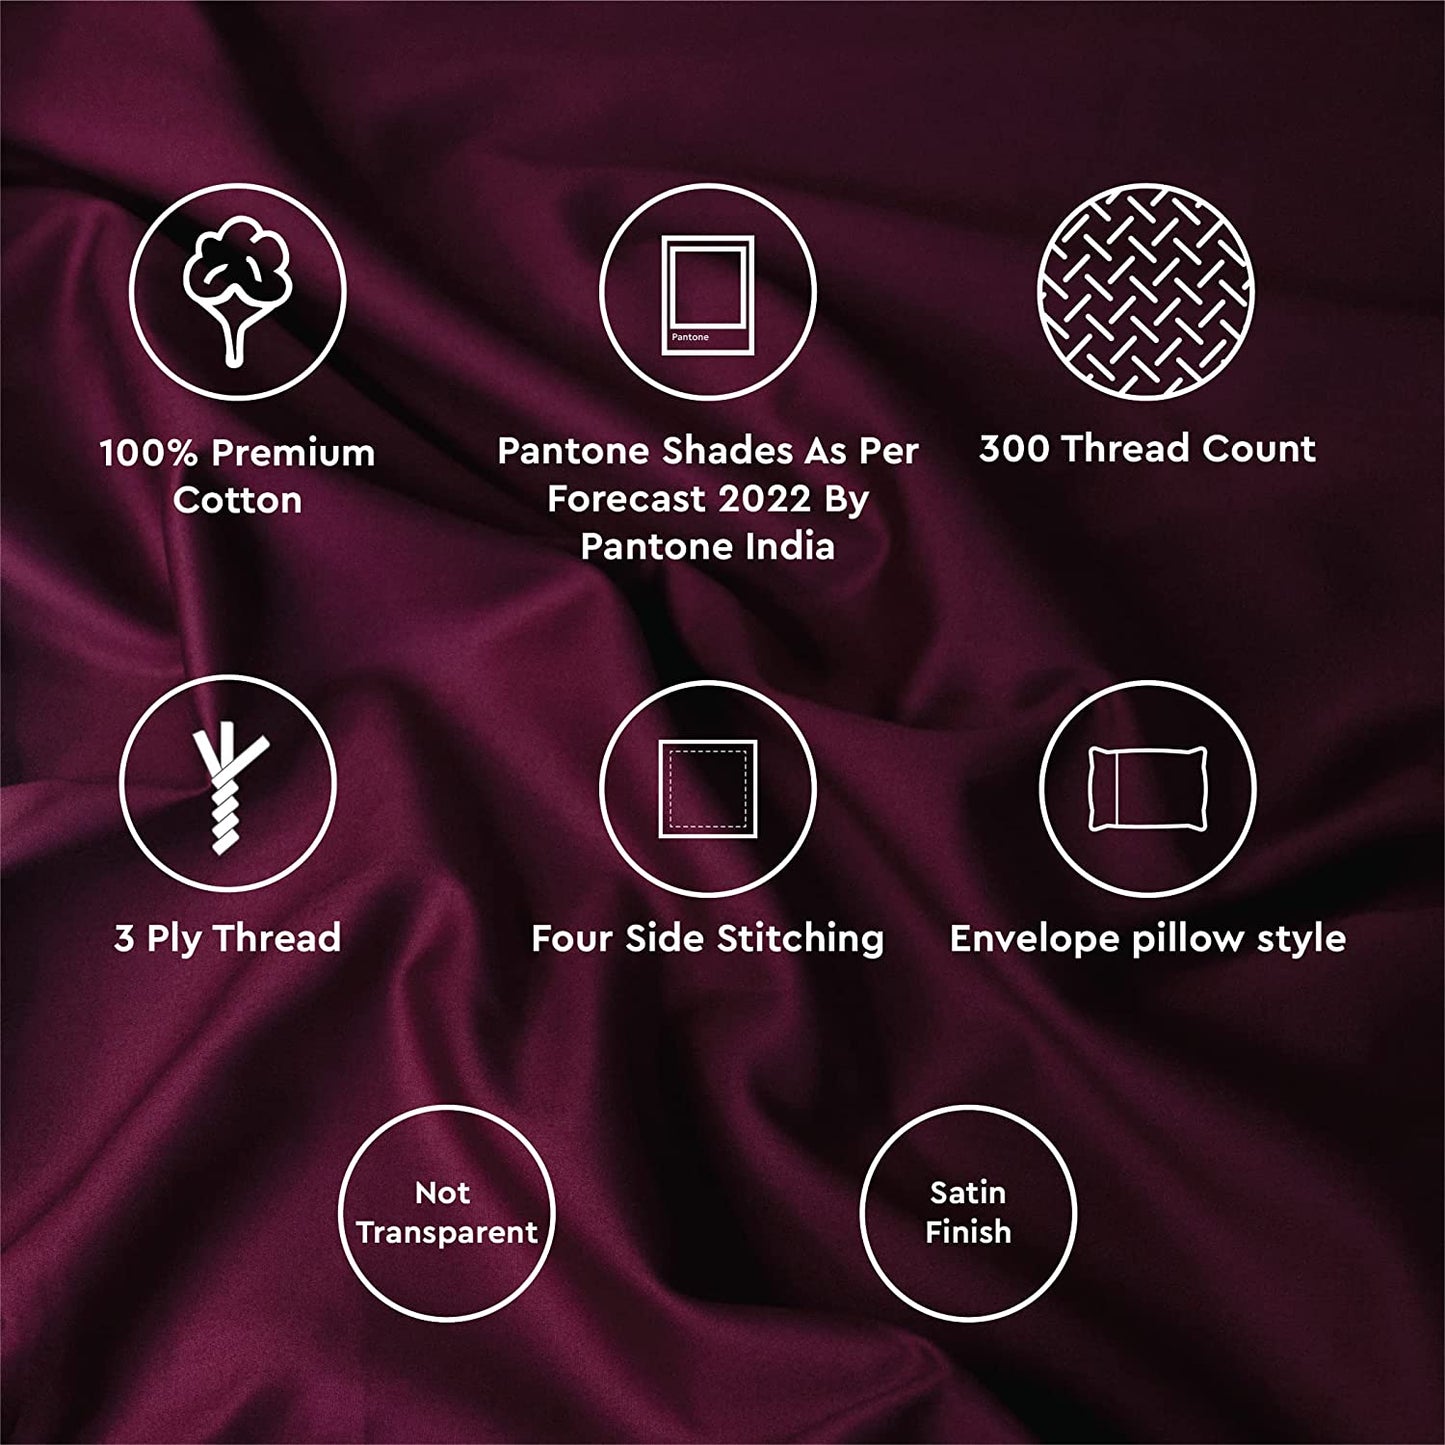 Melange Premium Fitted Bedsheet, 300TC, Open Air Blue - Single Bed